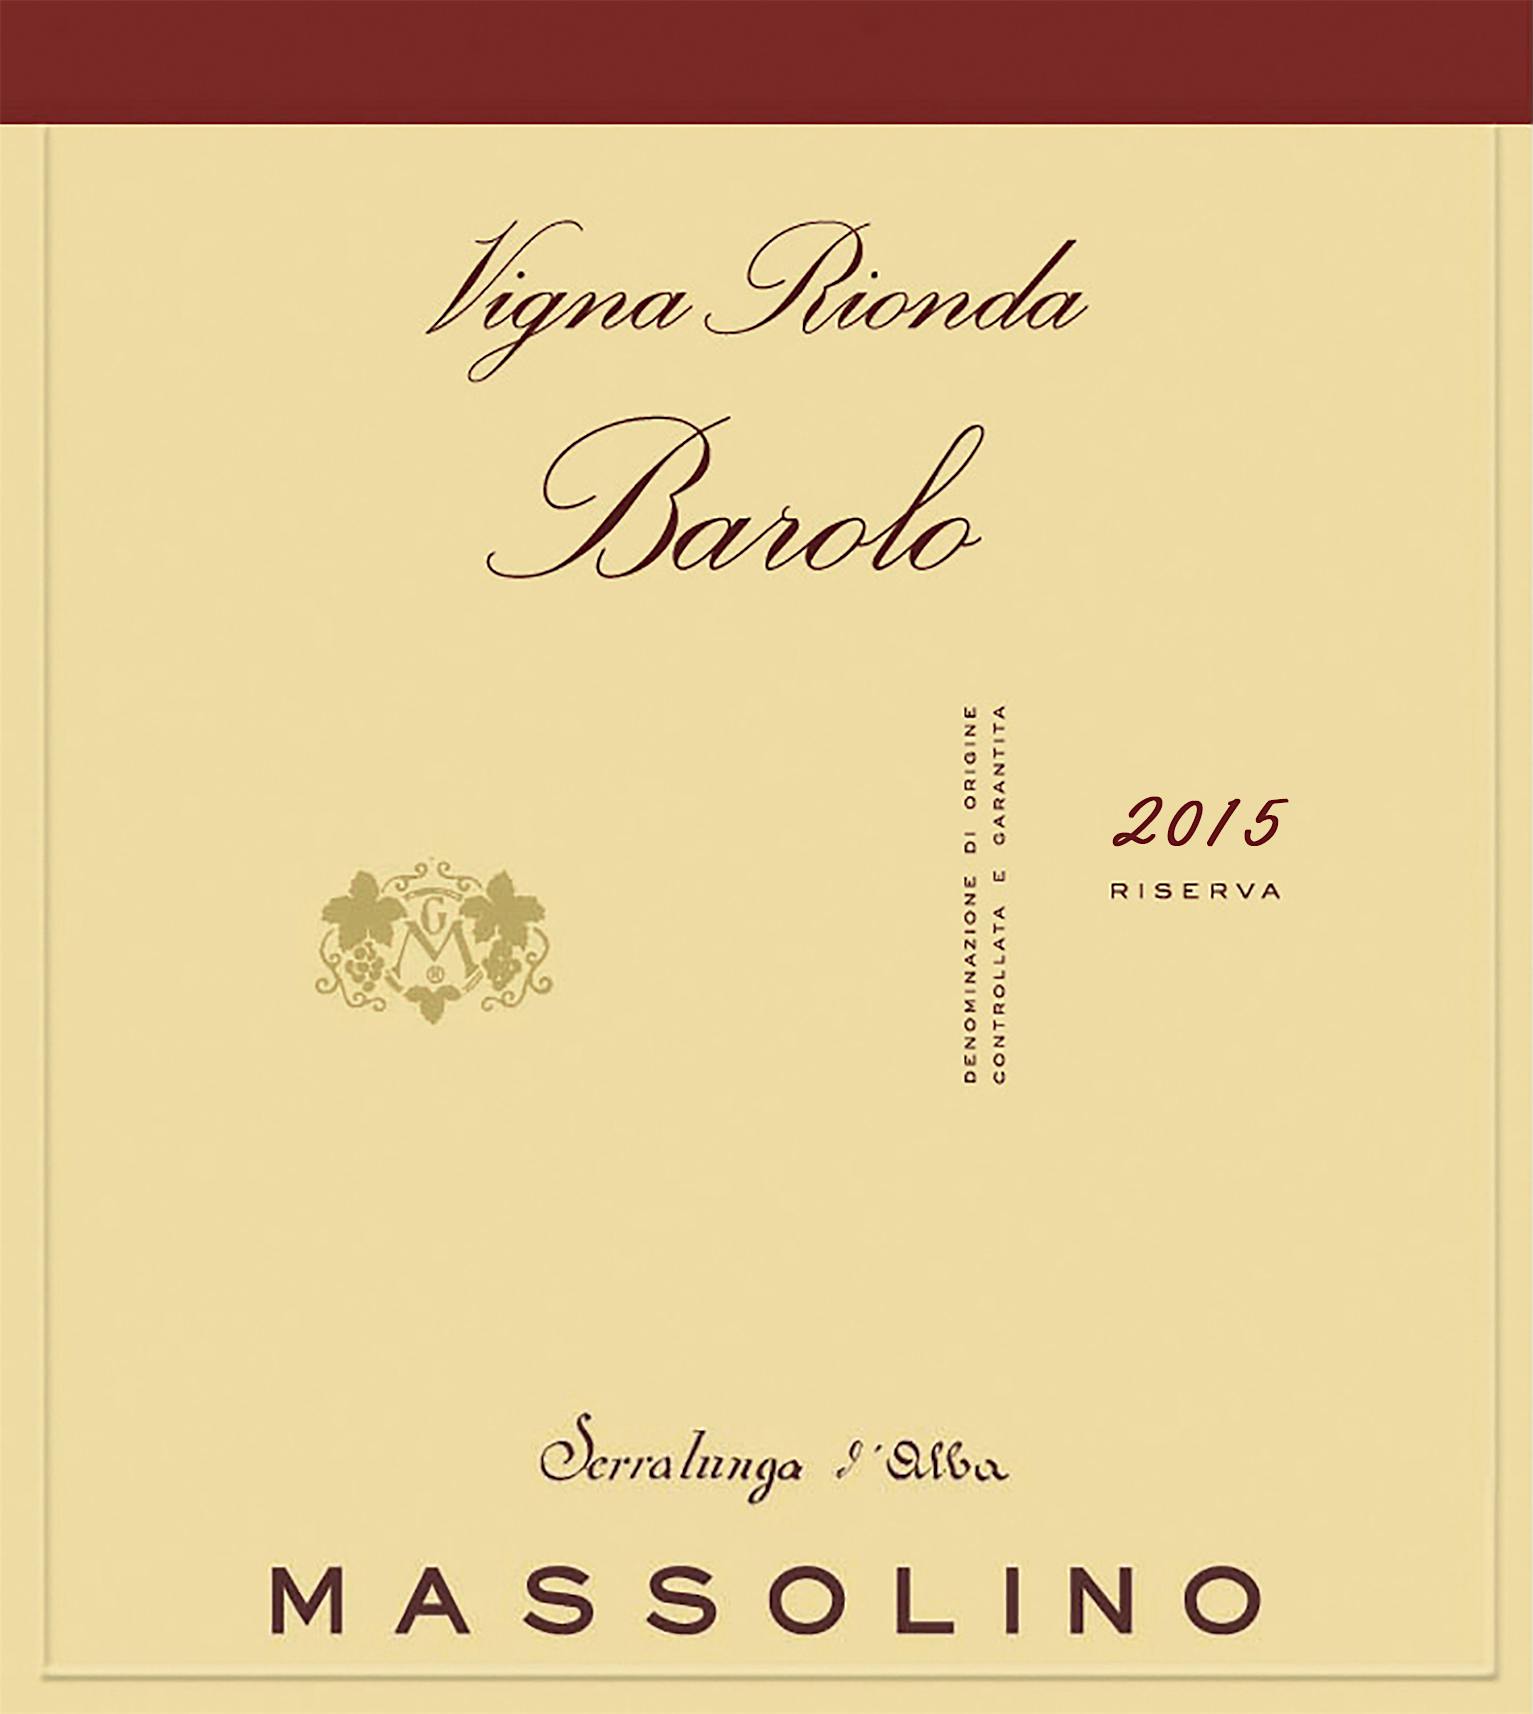 Label for Massolino